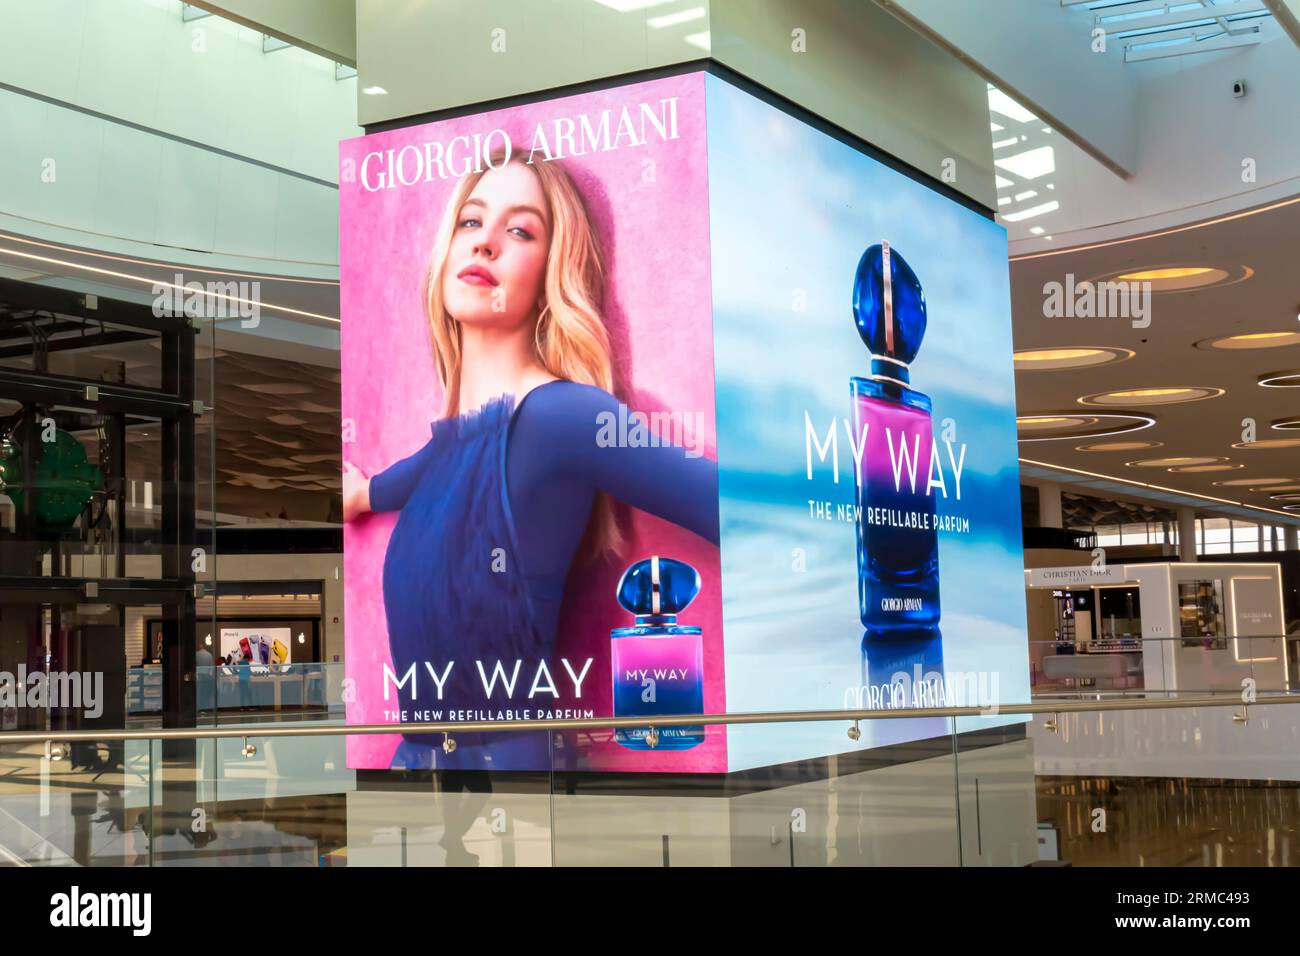 Giorgio Armani My Way Parfum advert billboard digital poster in Bahrain airport Stock Photo